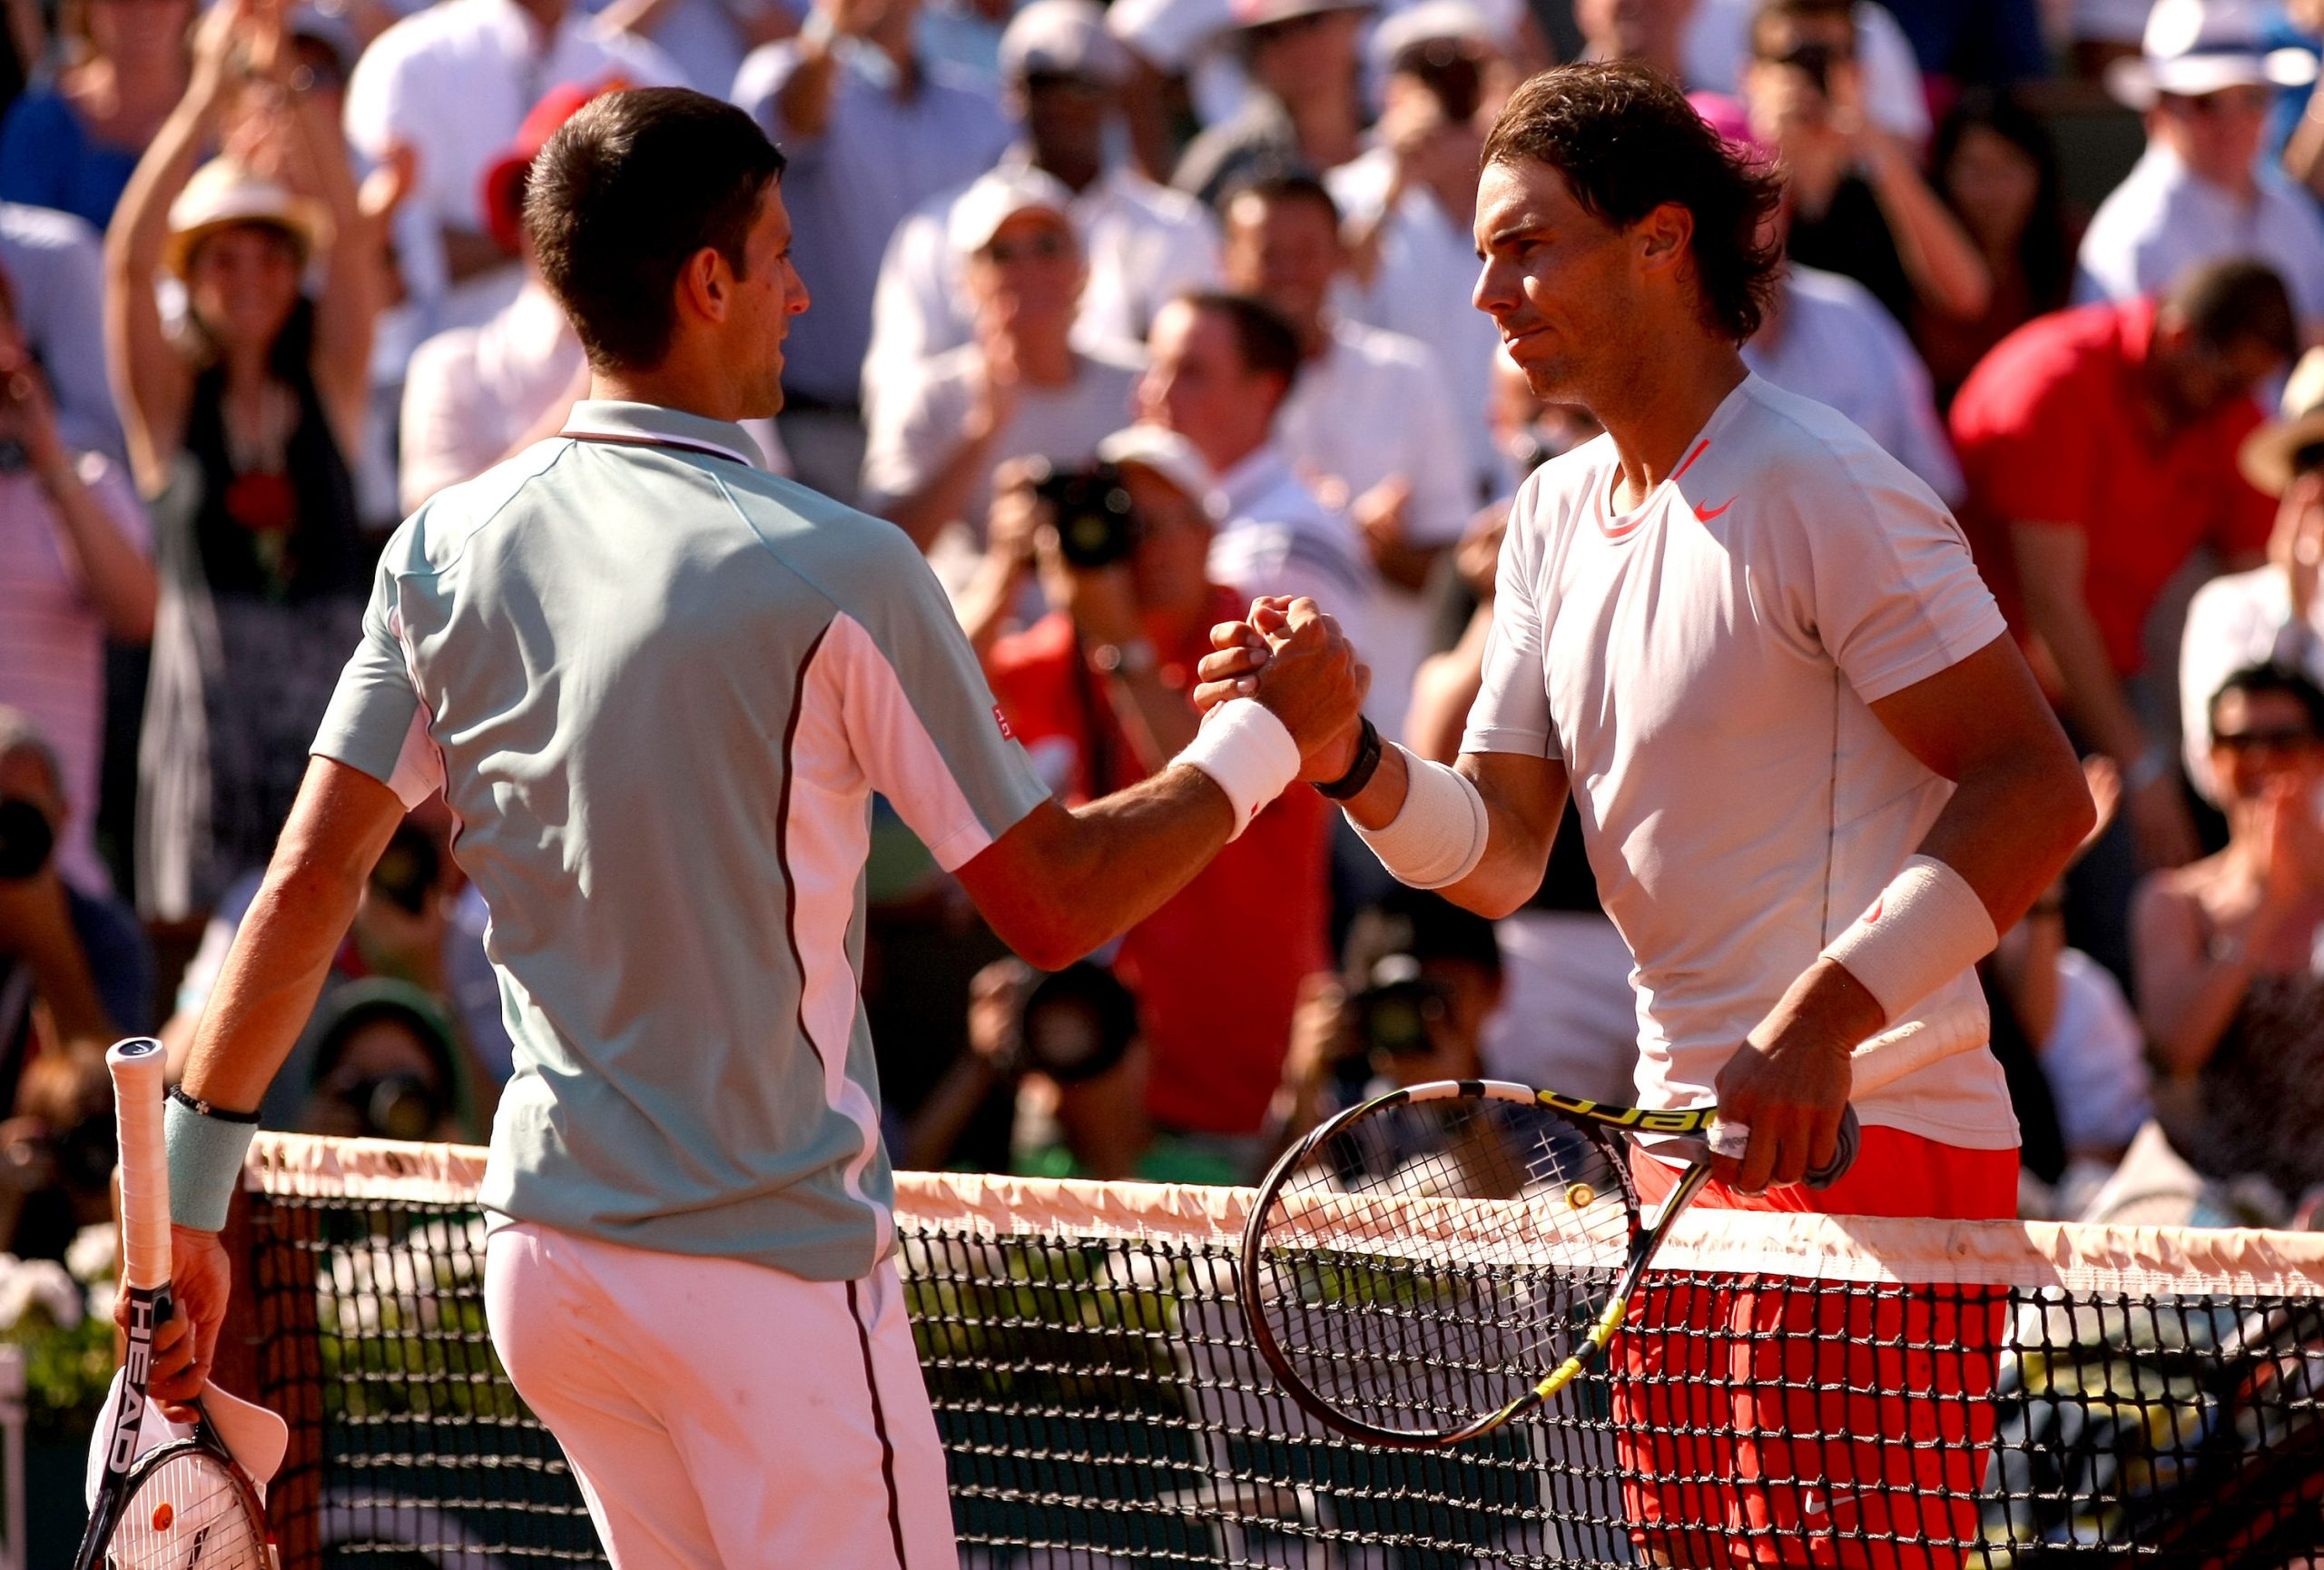 Rafael Nadal criticises Novak Djokovic’s vaccine stance, says world has ‘suffered enough’